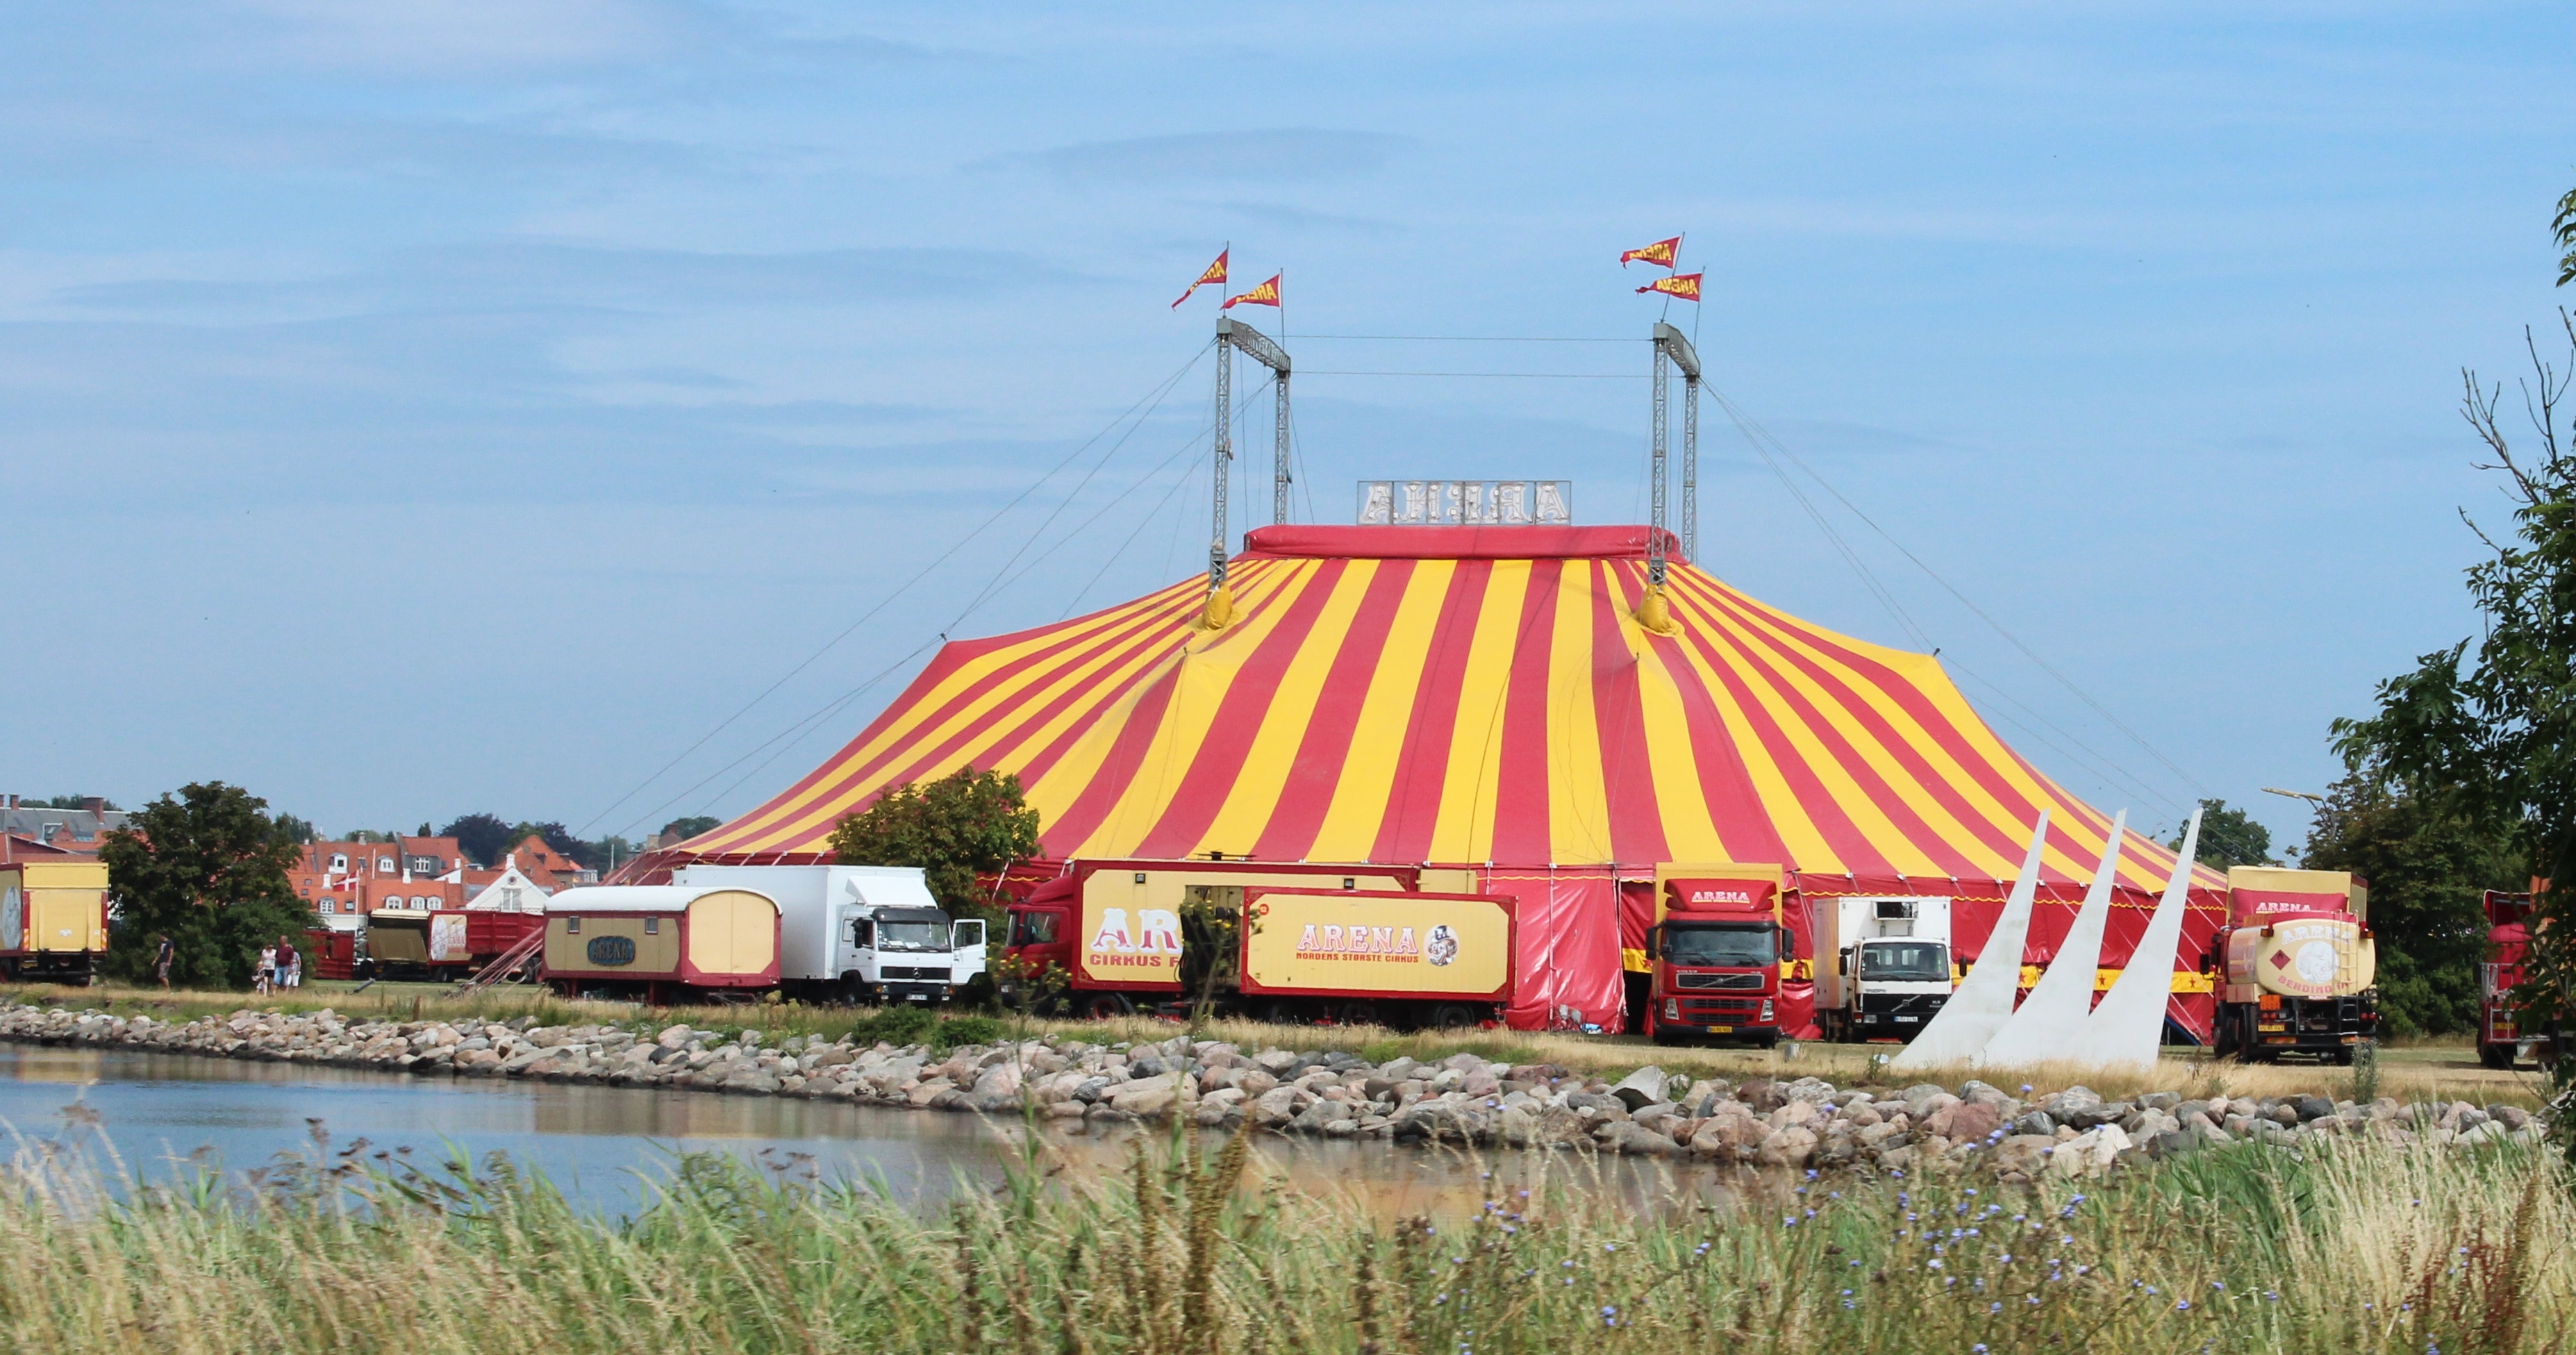 Opdatering Tom Audreath Revival File:Cirkus Arena - Kerteminde.JPG - Wikimedia Commons